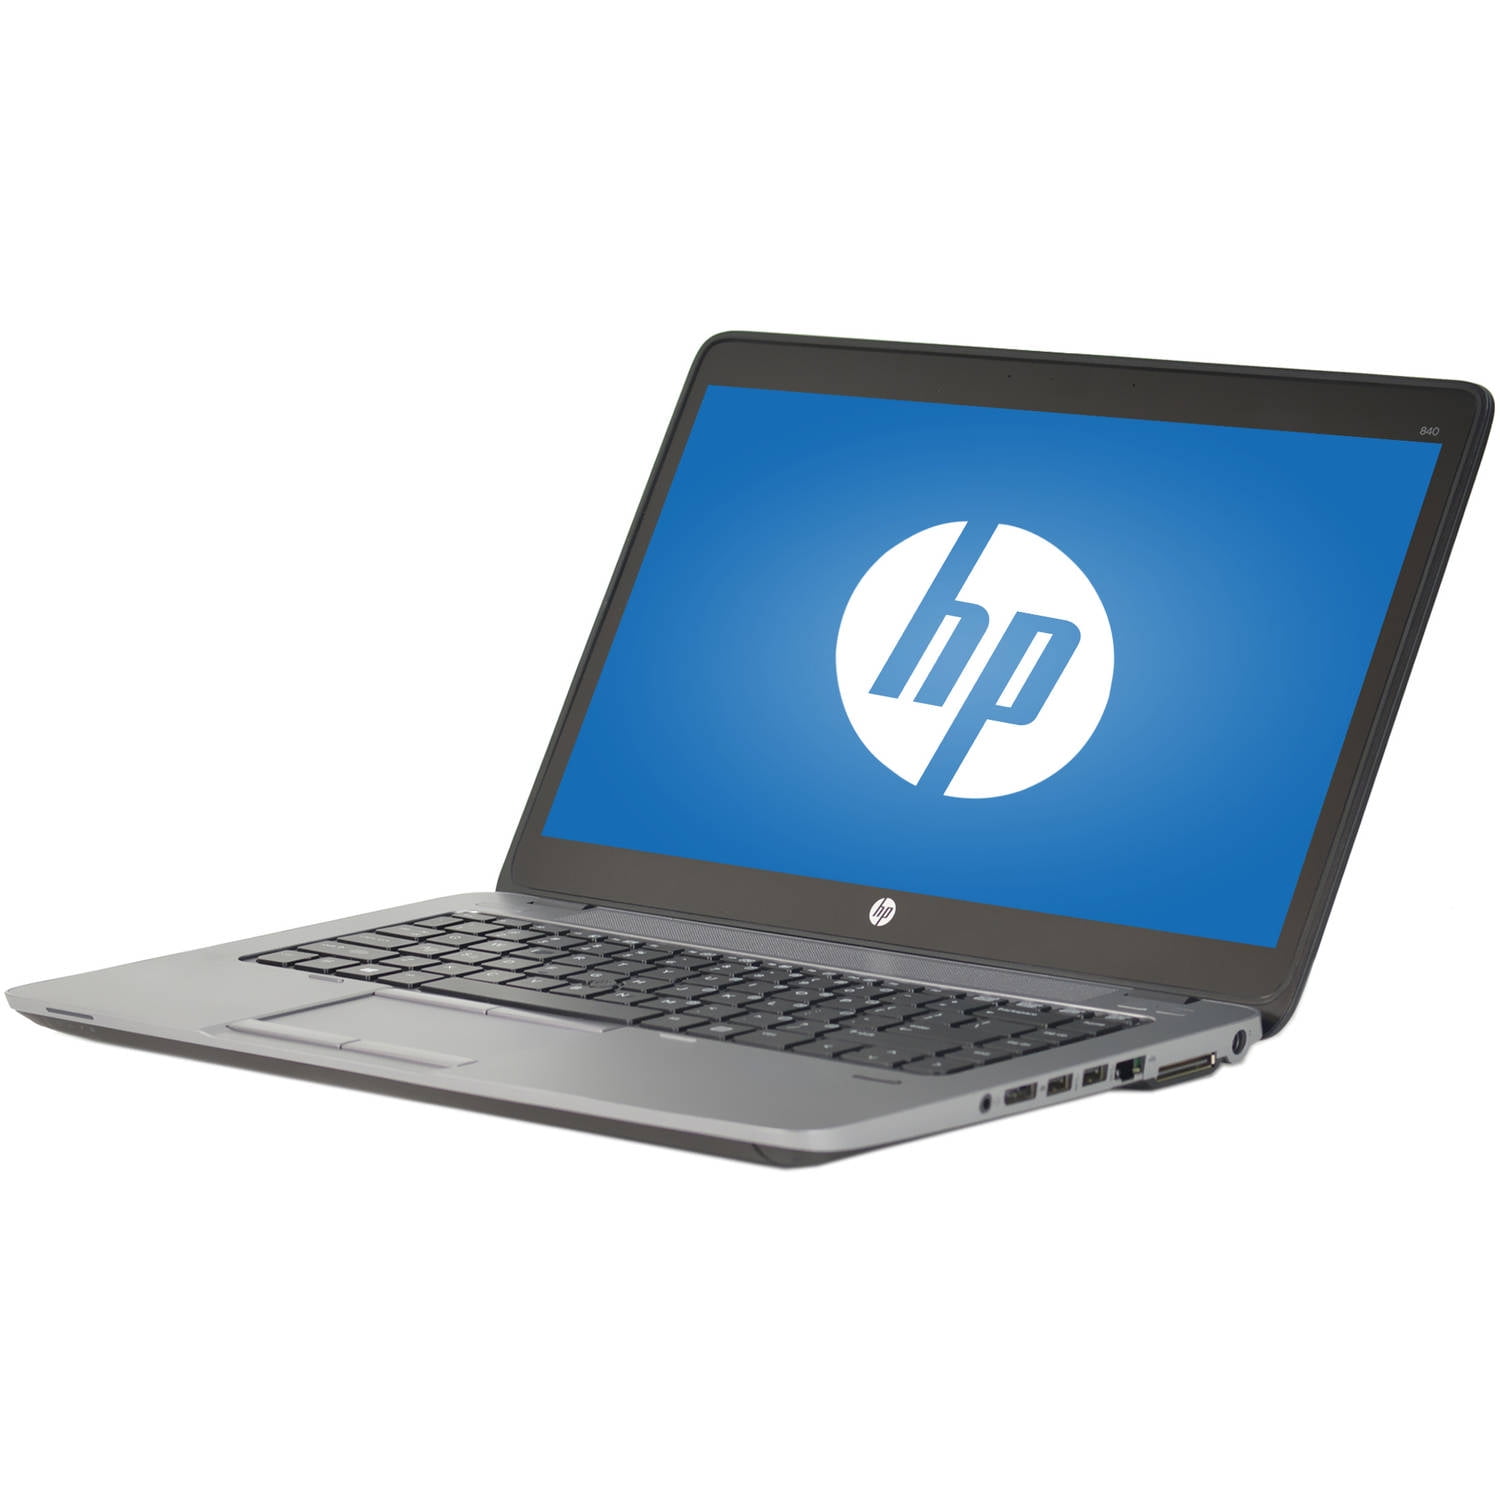 HP USATO NOTEBOOK LAPTOP EliteBook 840 g1 i5-4300u 4gb 128gb SSD w10 UMTS 